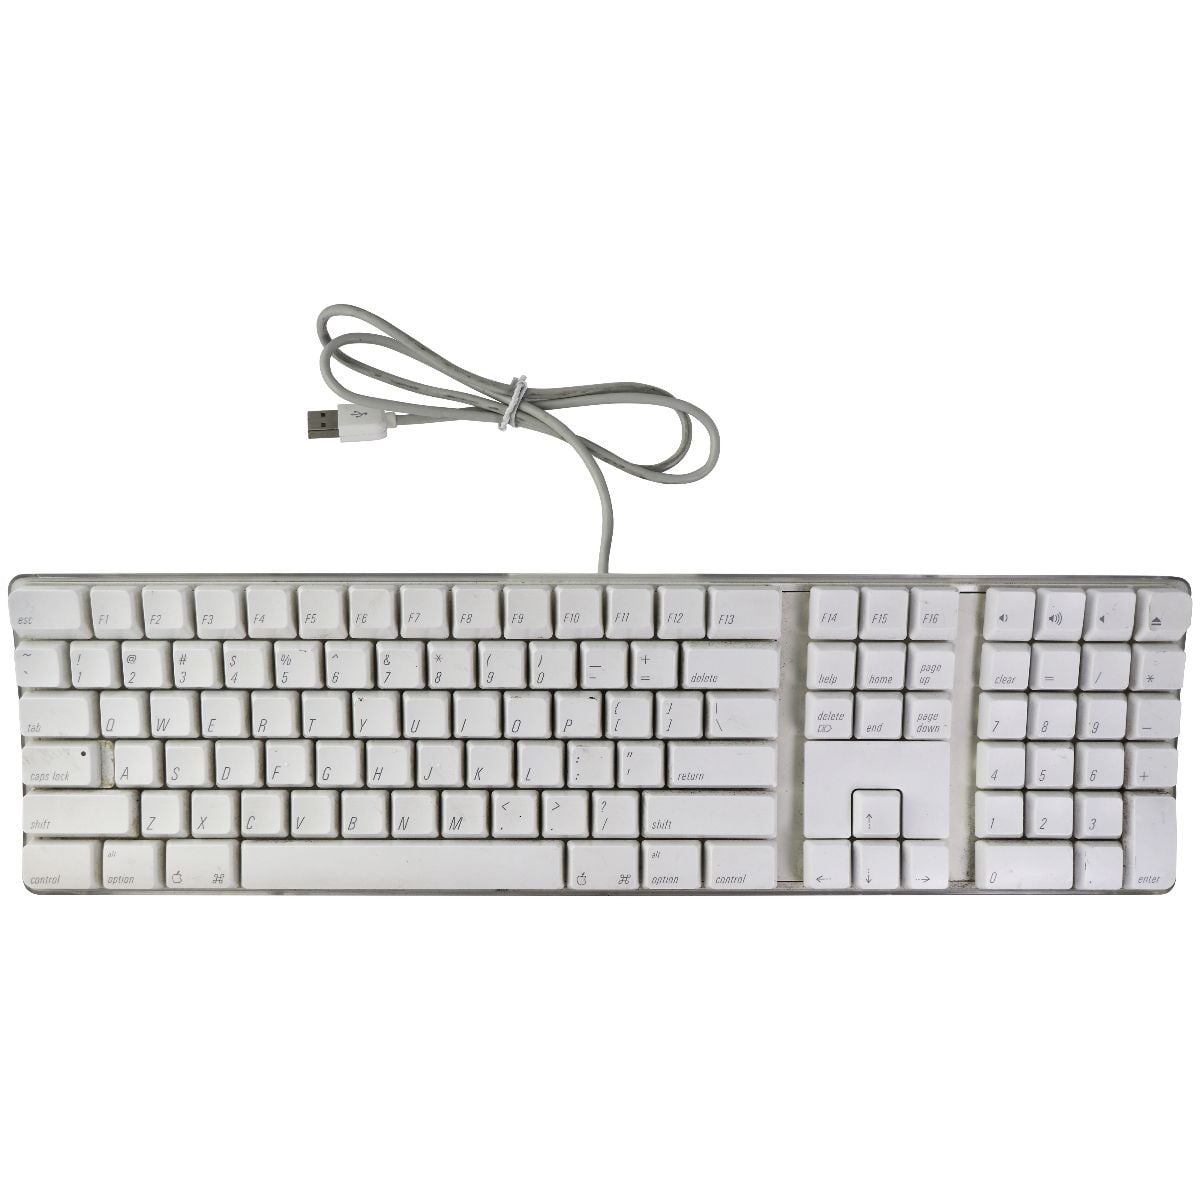 Apple Original (A1048) Wired USB Keyboard for Mac - (Used) - Walmart.com